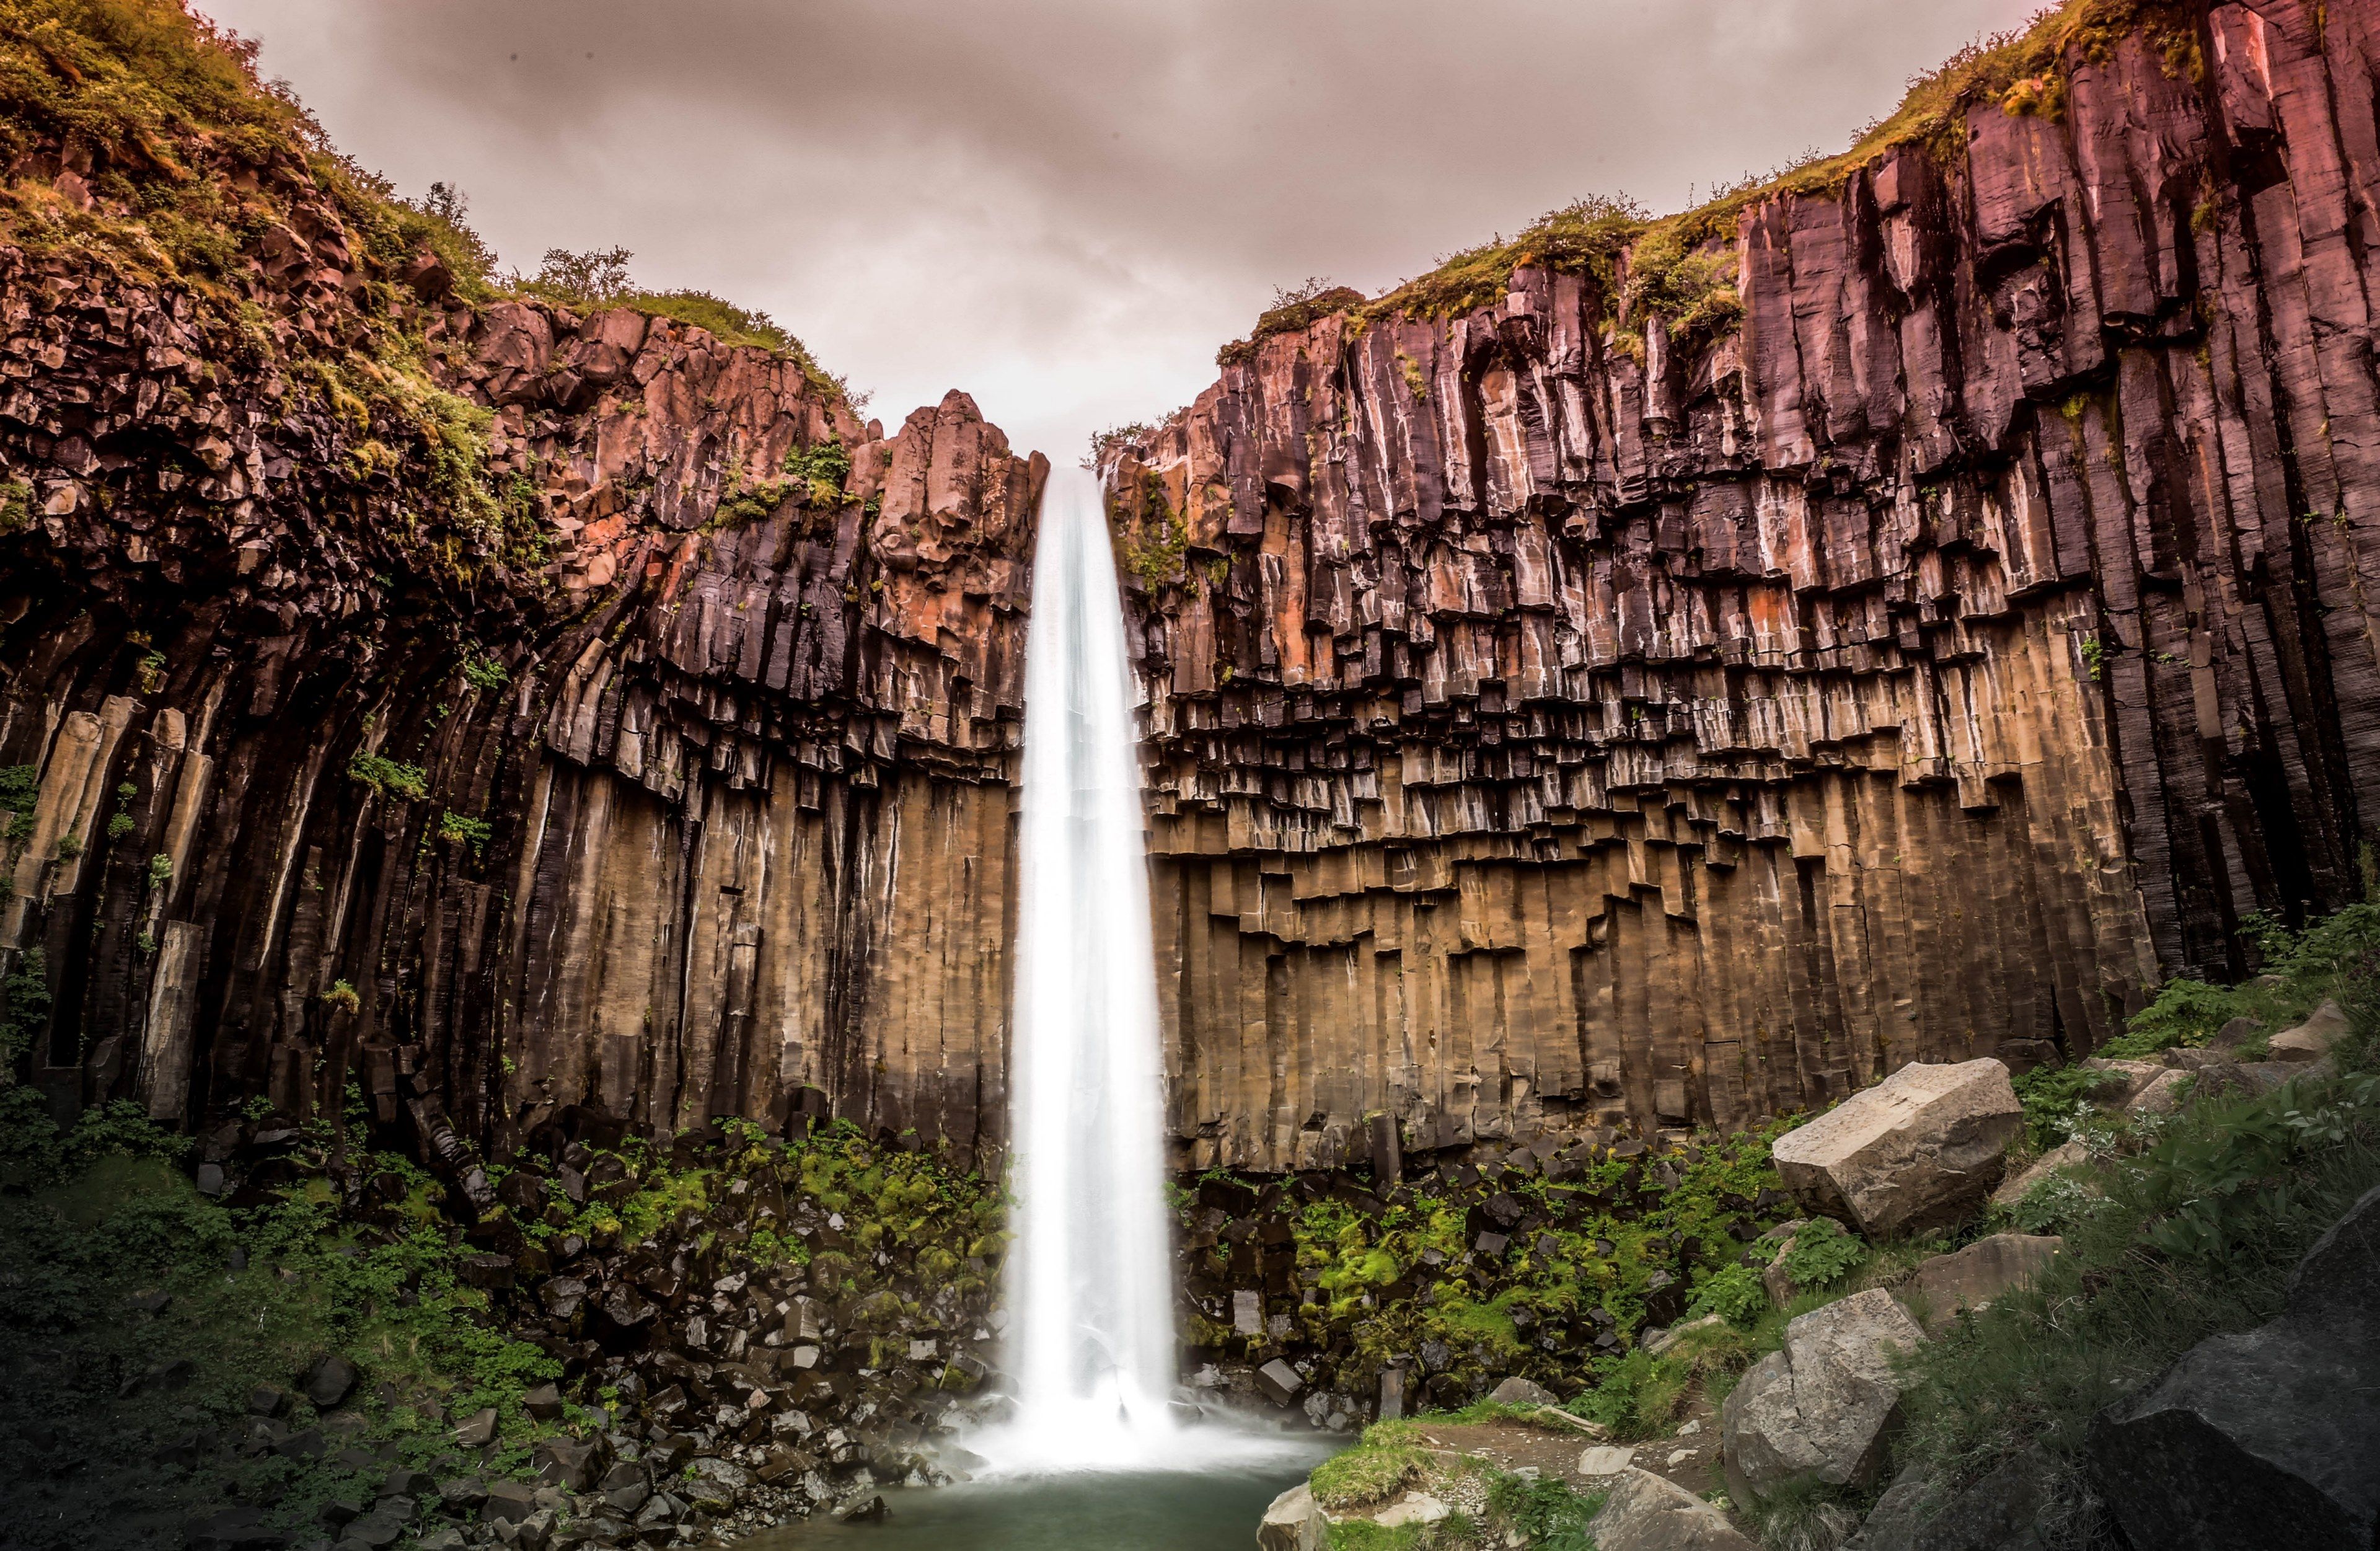 majestic waterfall cascades down a rocky mountainside